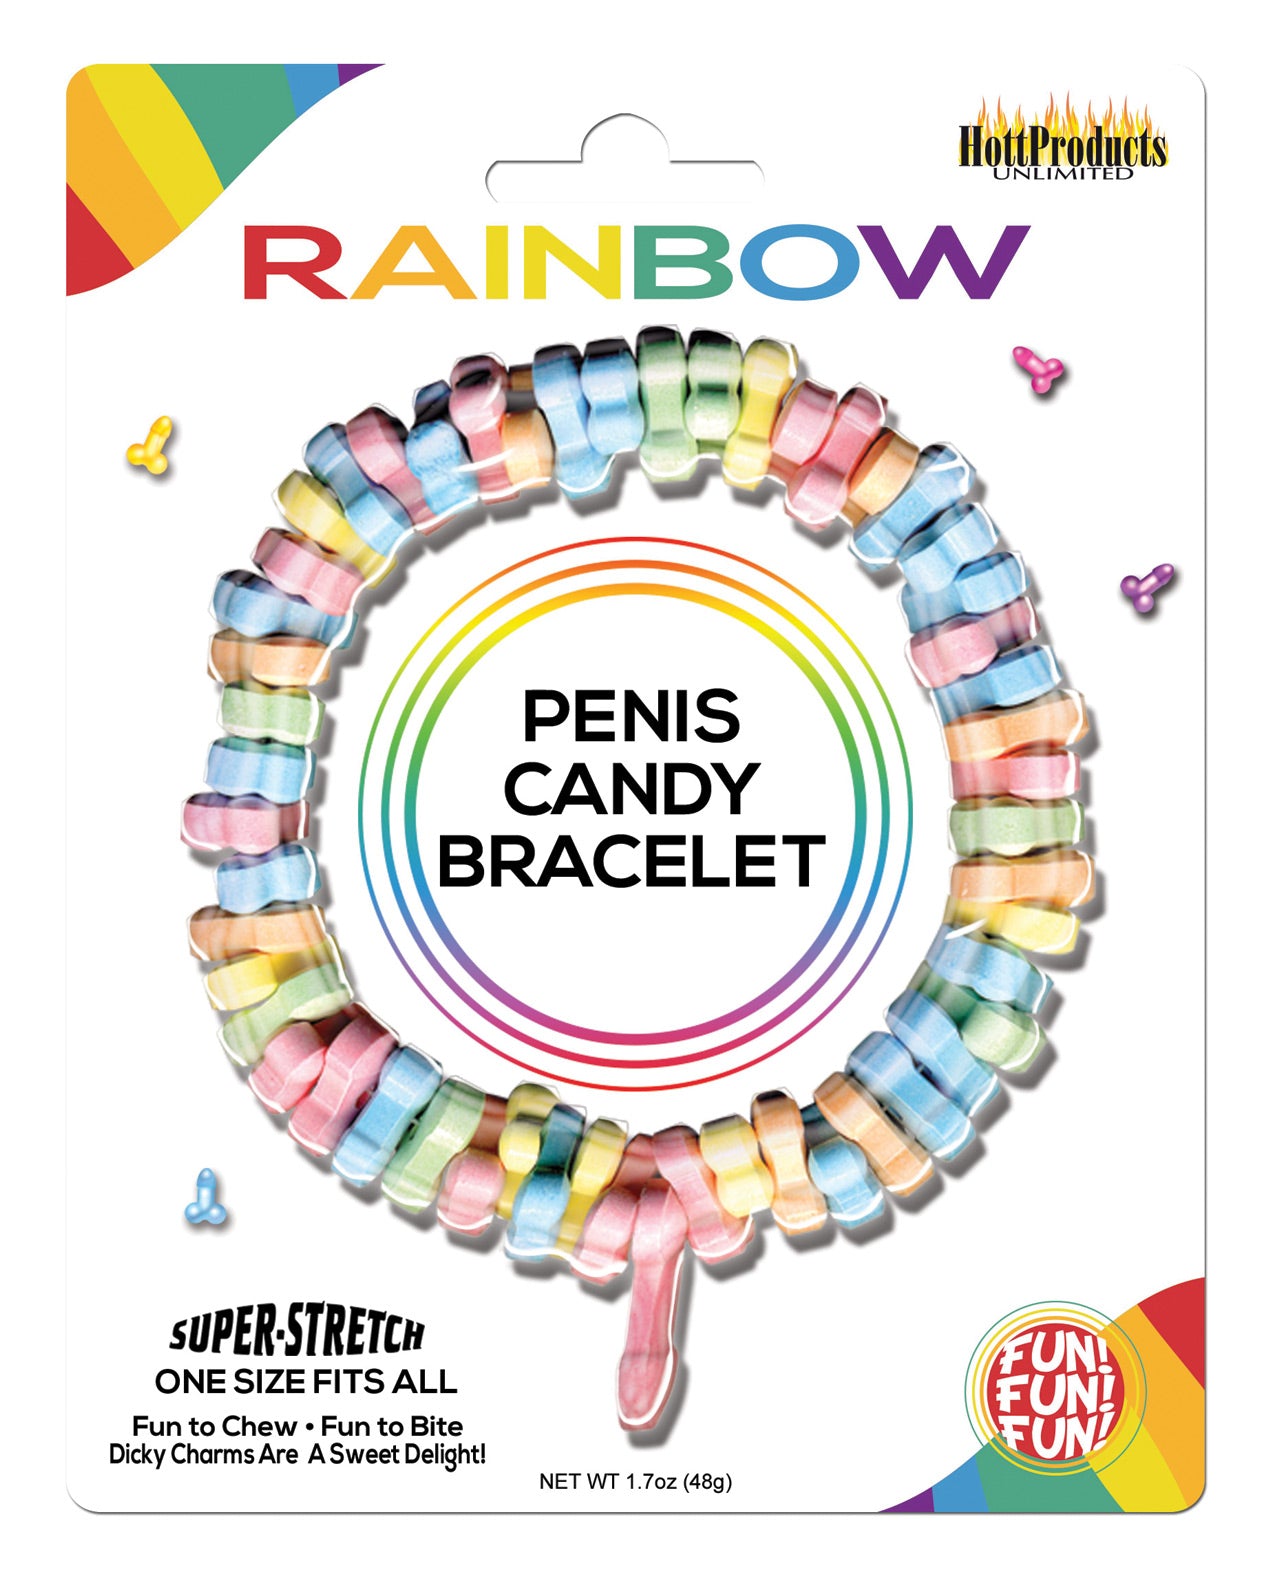 Rainbow Penis Candy Bracelet